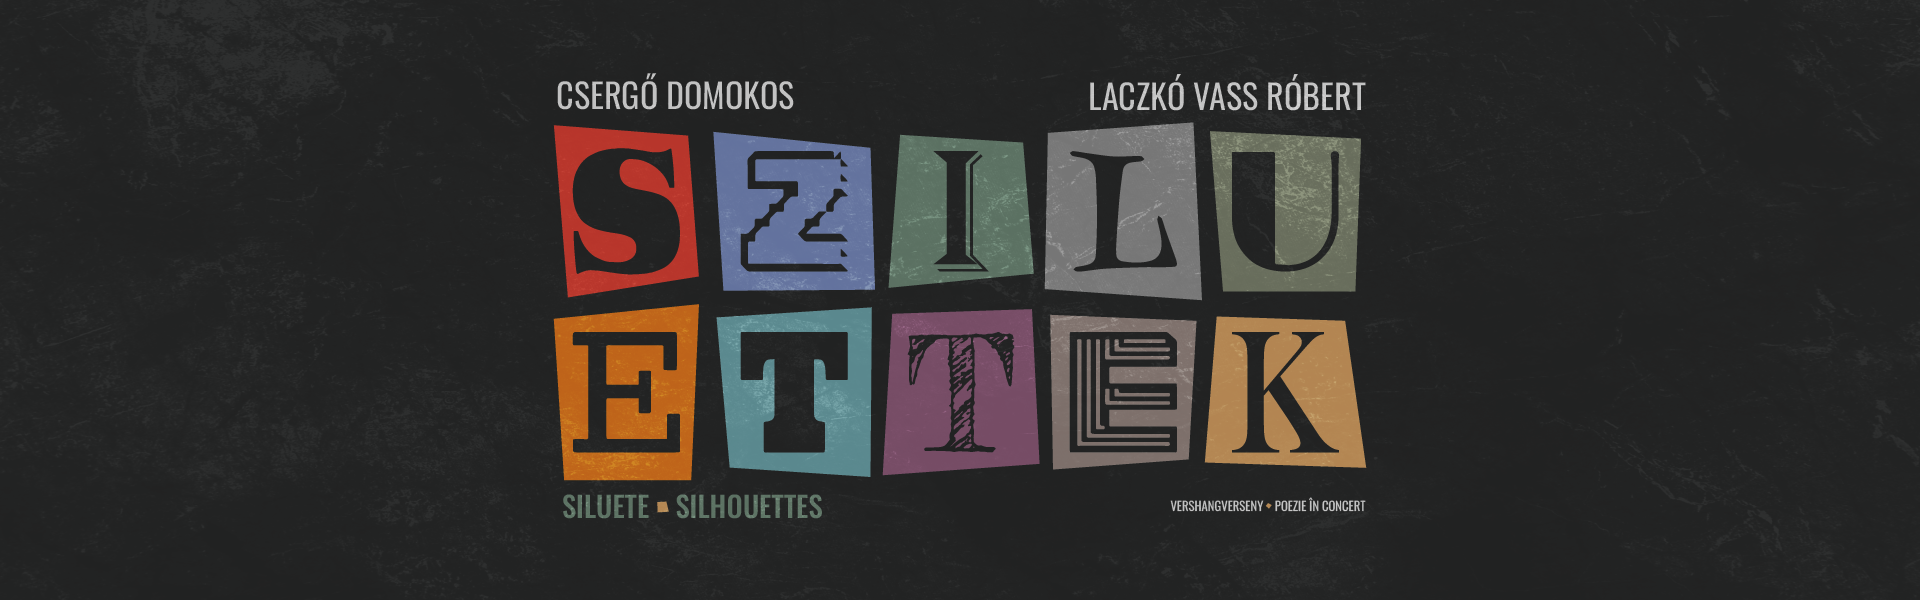 Sziluettek honlap event cover